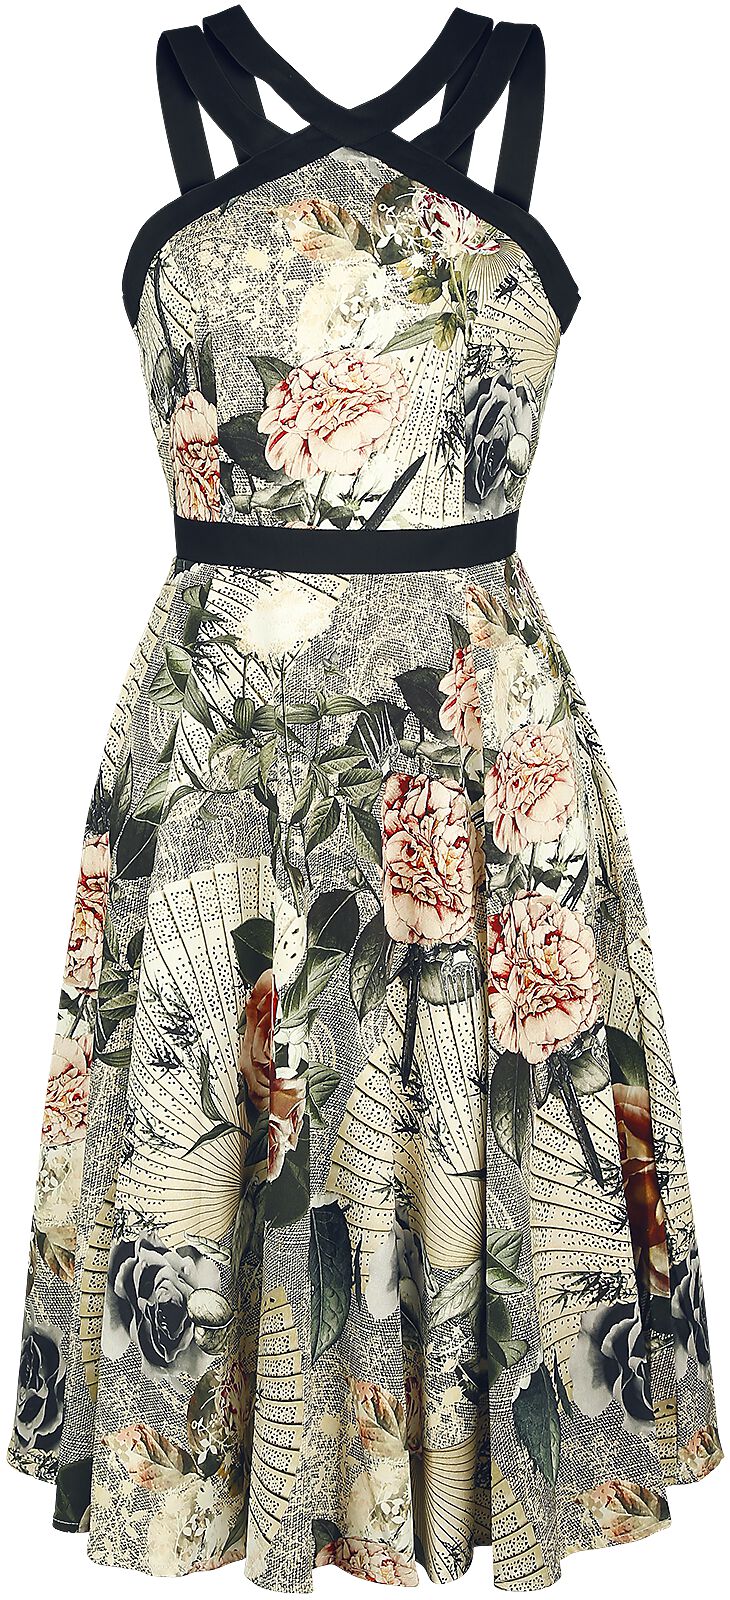 H&R London - Rockabilly Kleid knielang - Ancient Roses - S bis 4XL - für Damen - Größe M - multicolor